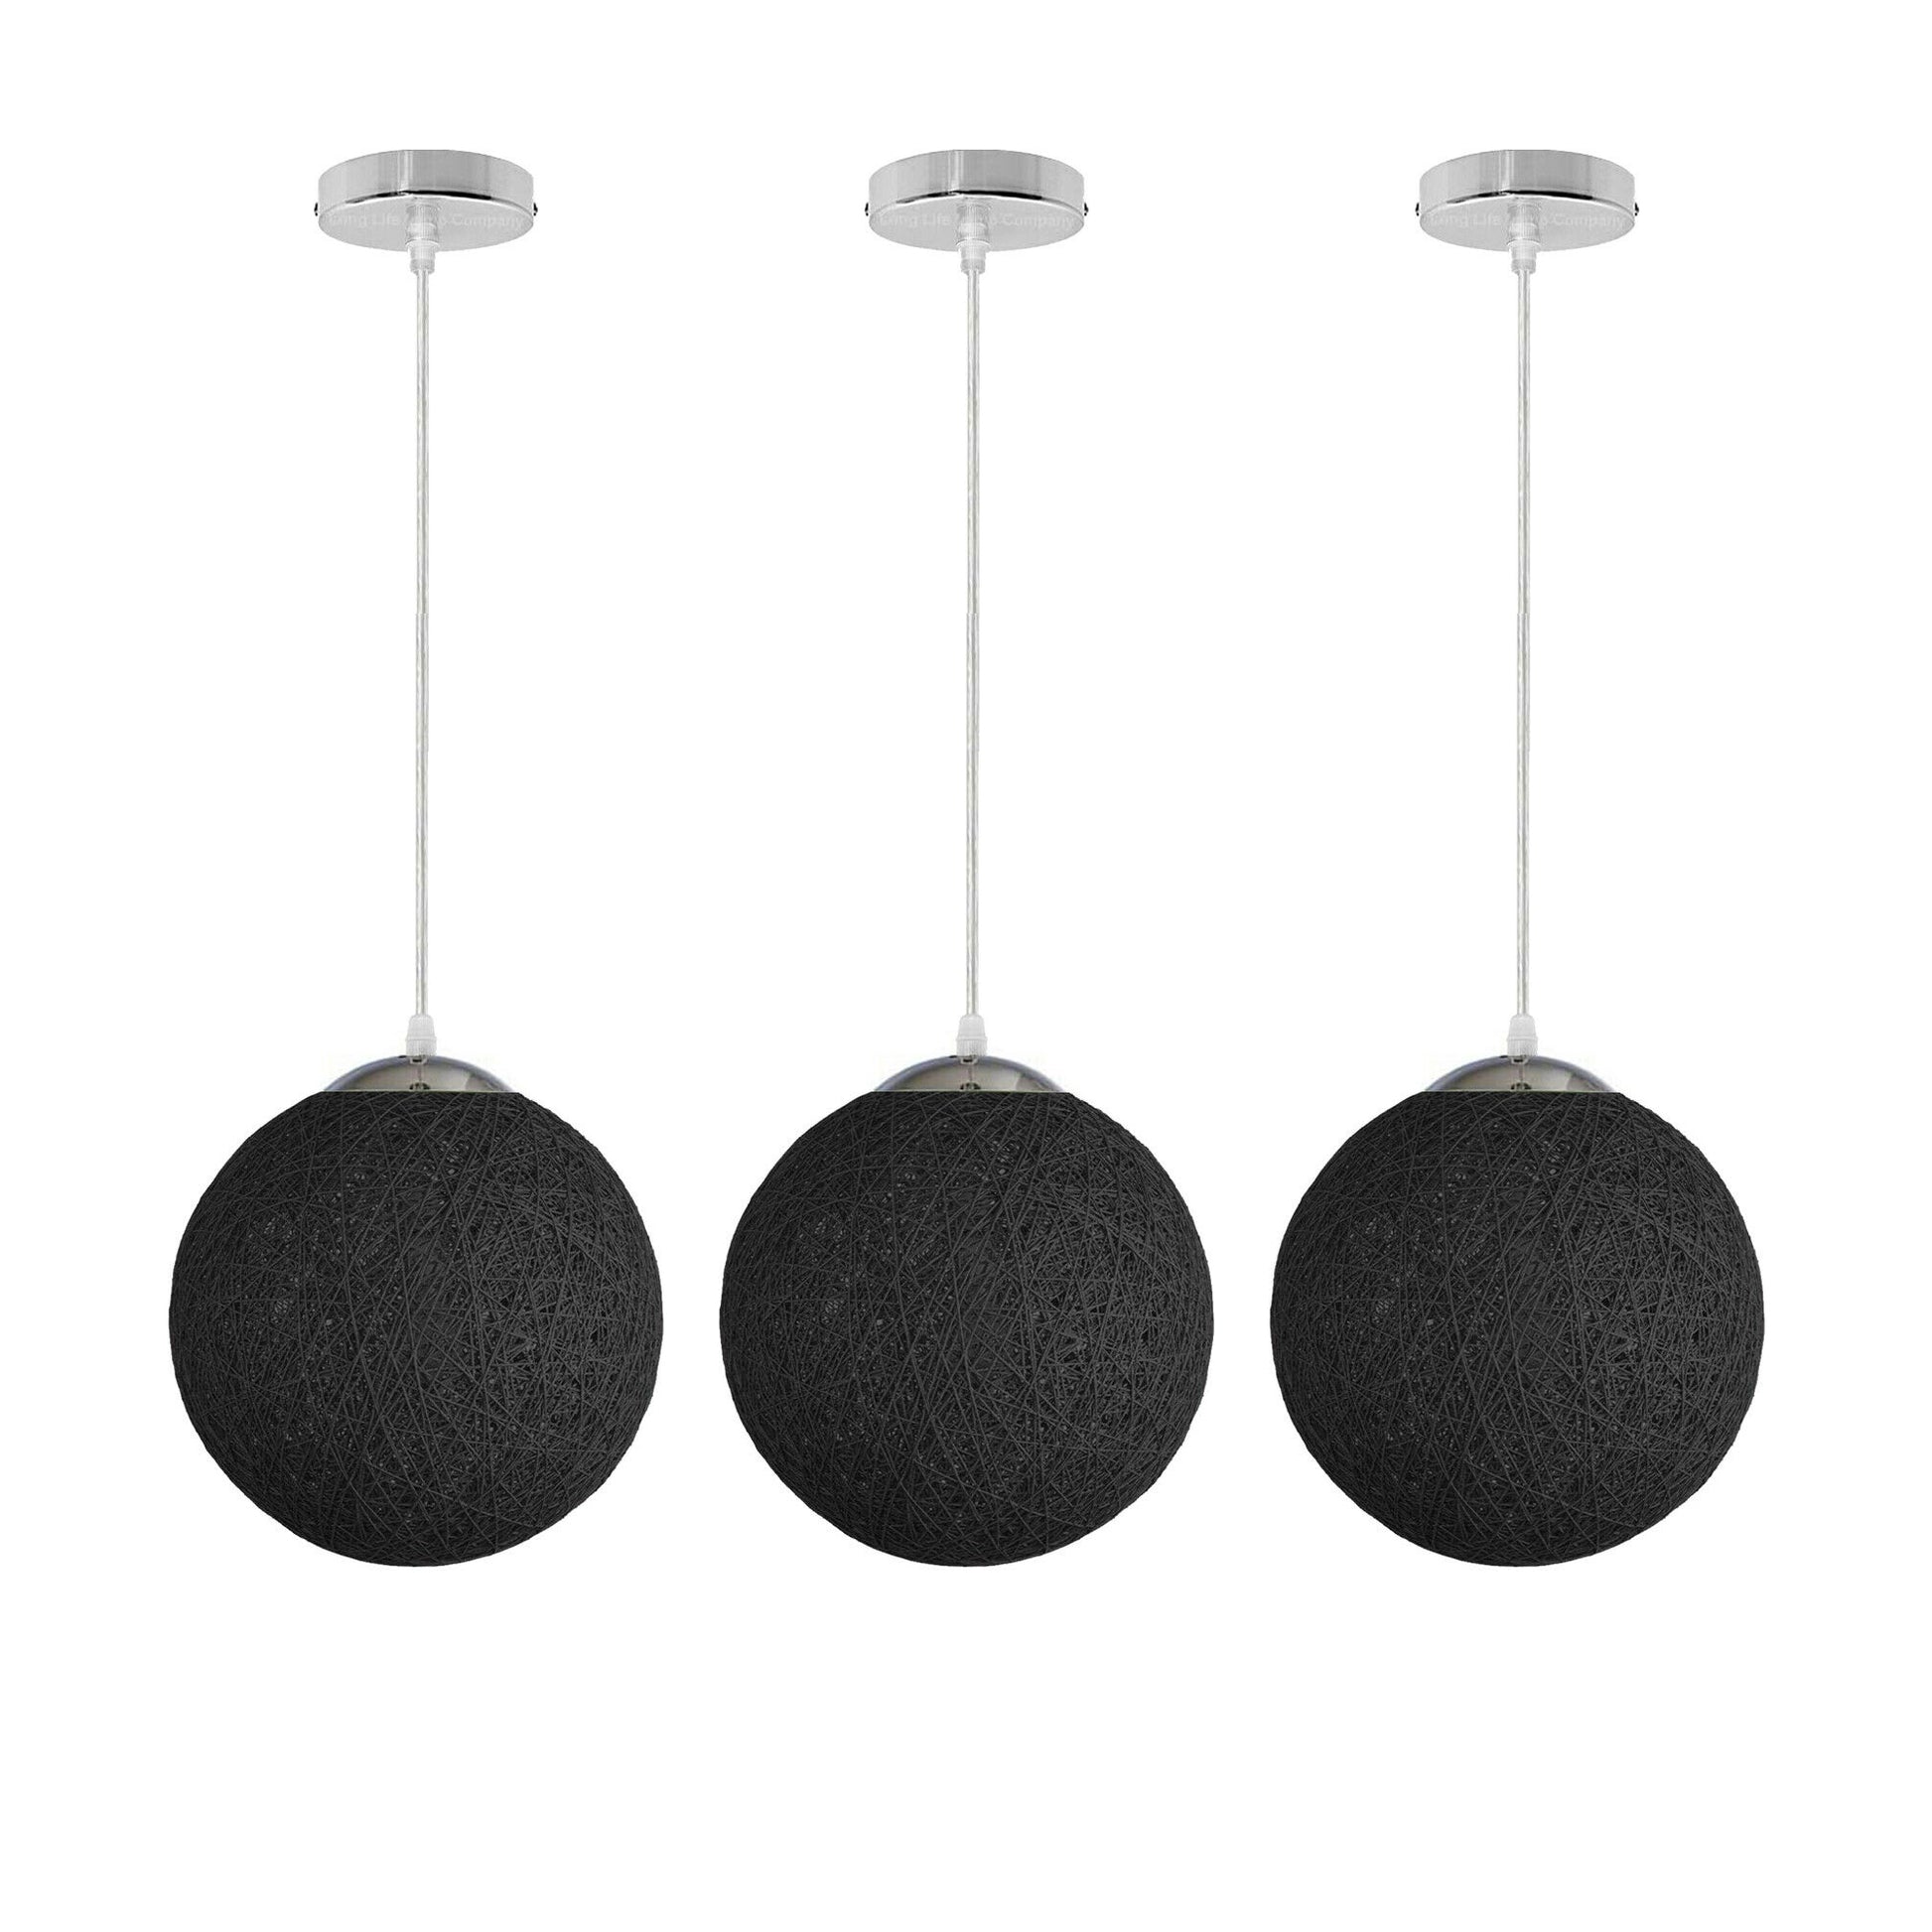 Black Chandelier with Ball Hanging Lamp Single Indoor Lamp Light~1808 - LEDSone UK Ltd